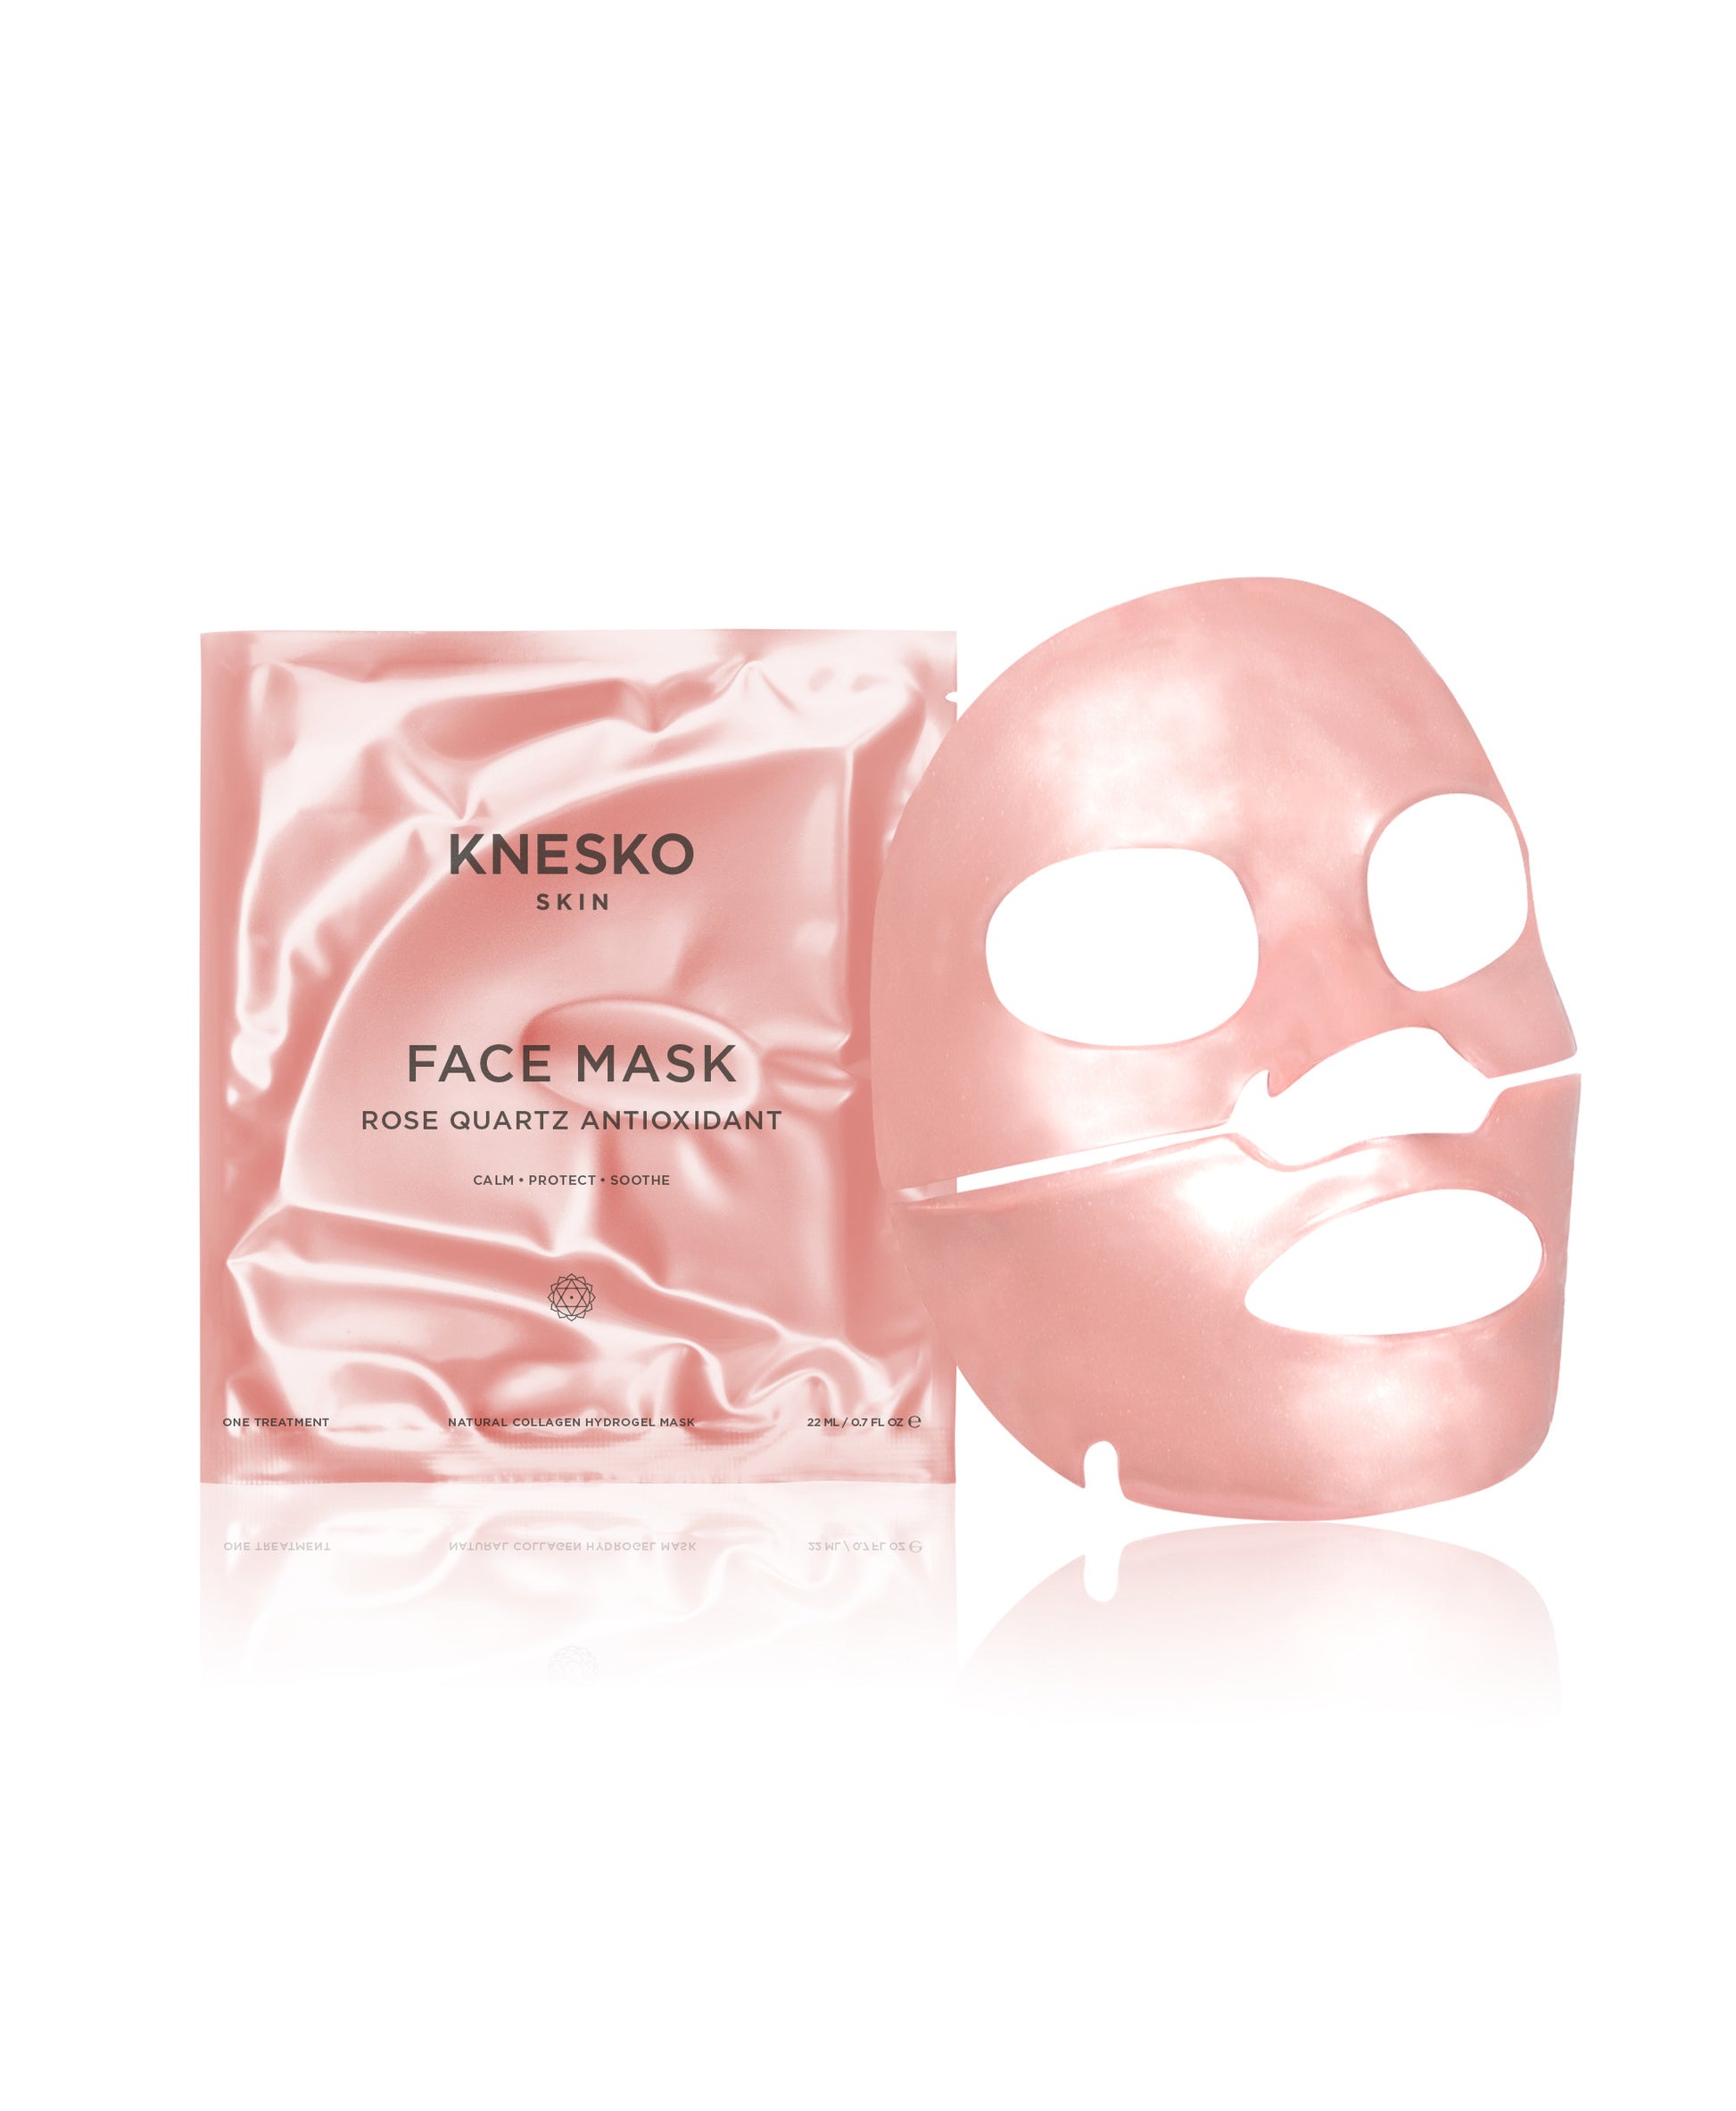 Rose Quartz Antioxidant Face Mask.